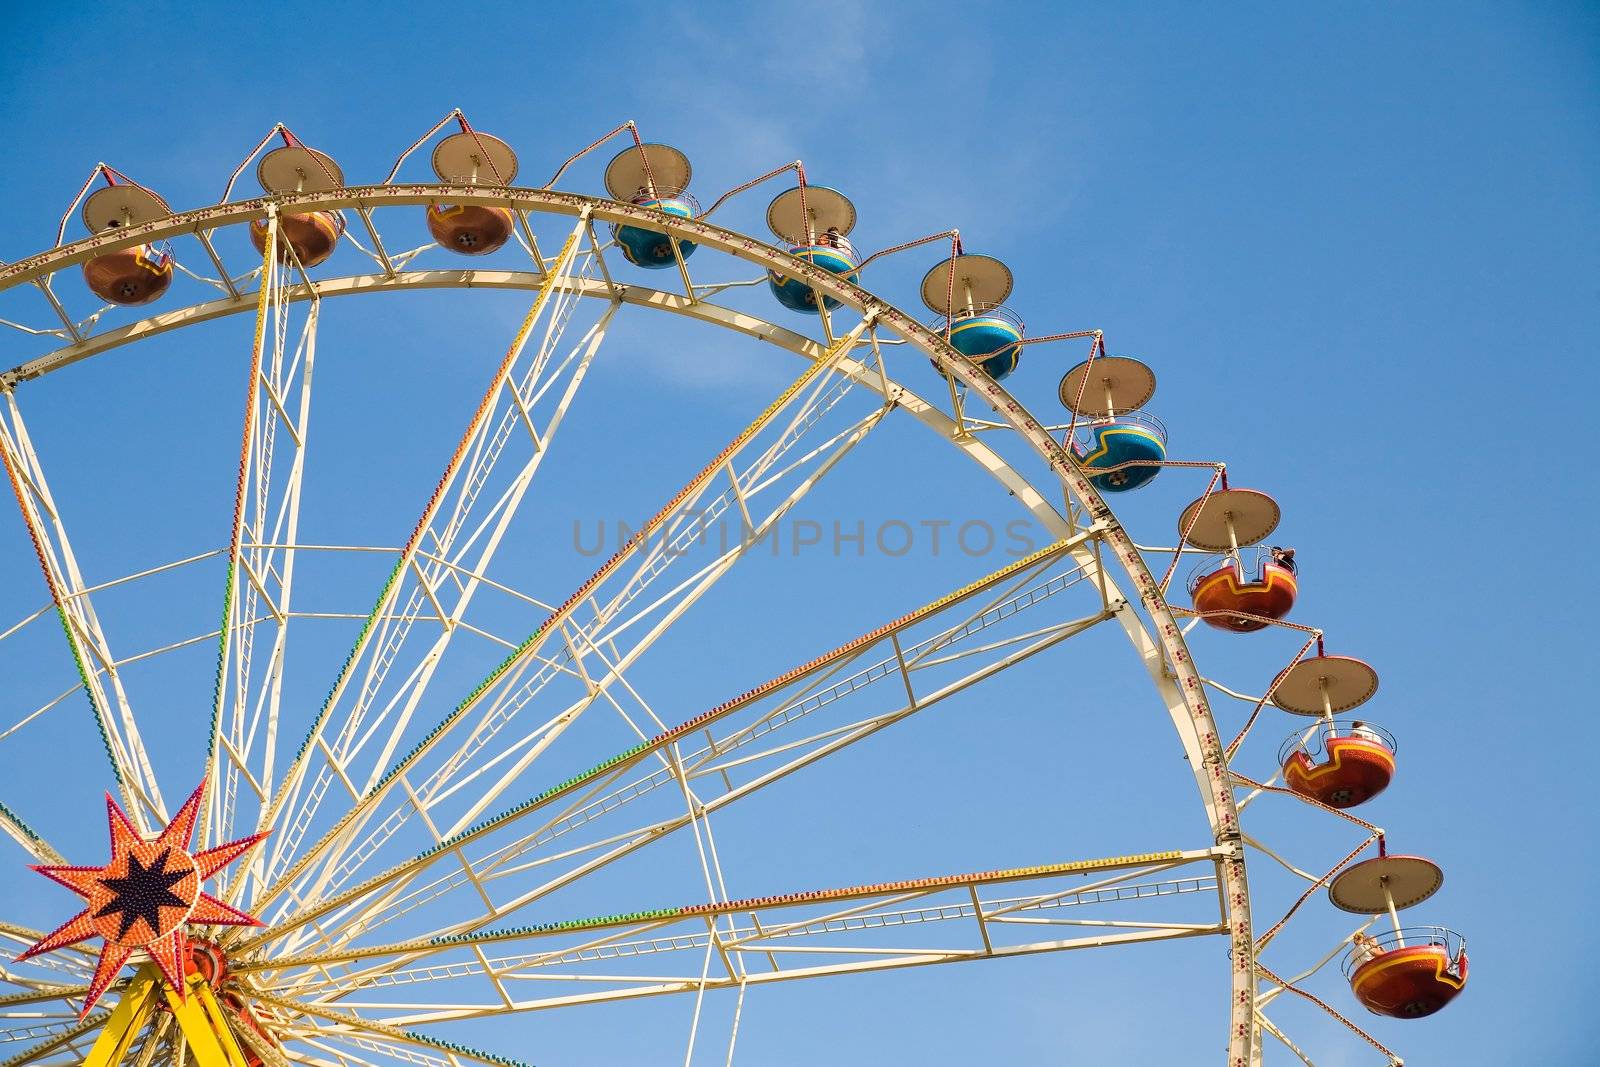 amusement grounds - ferring wheel